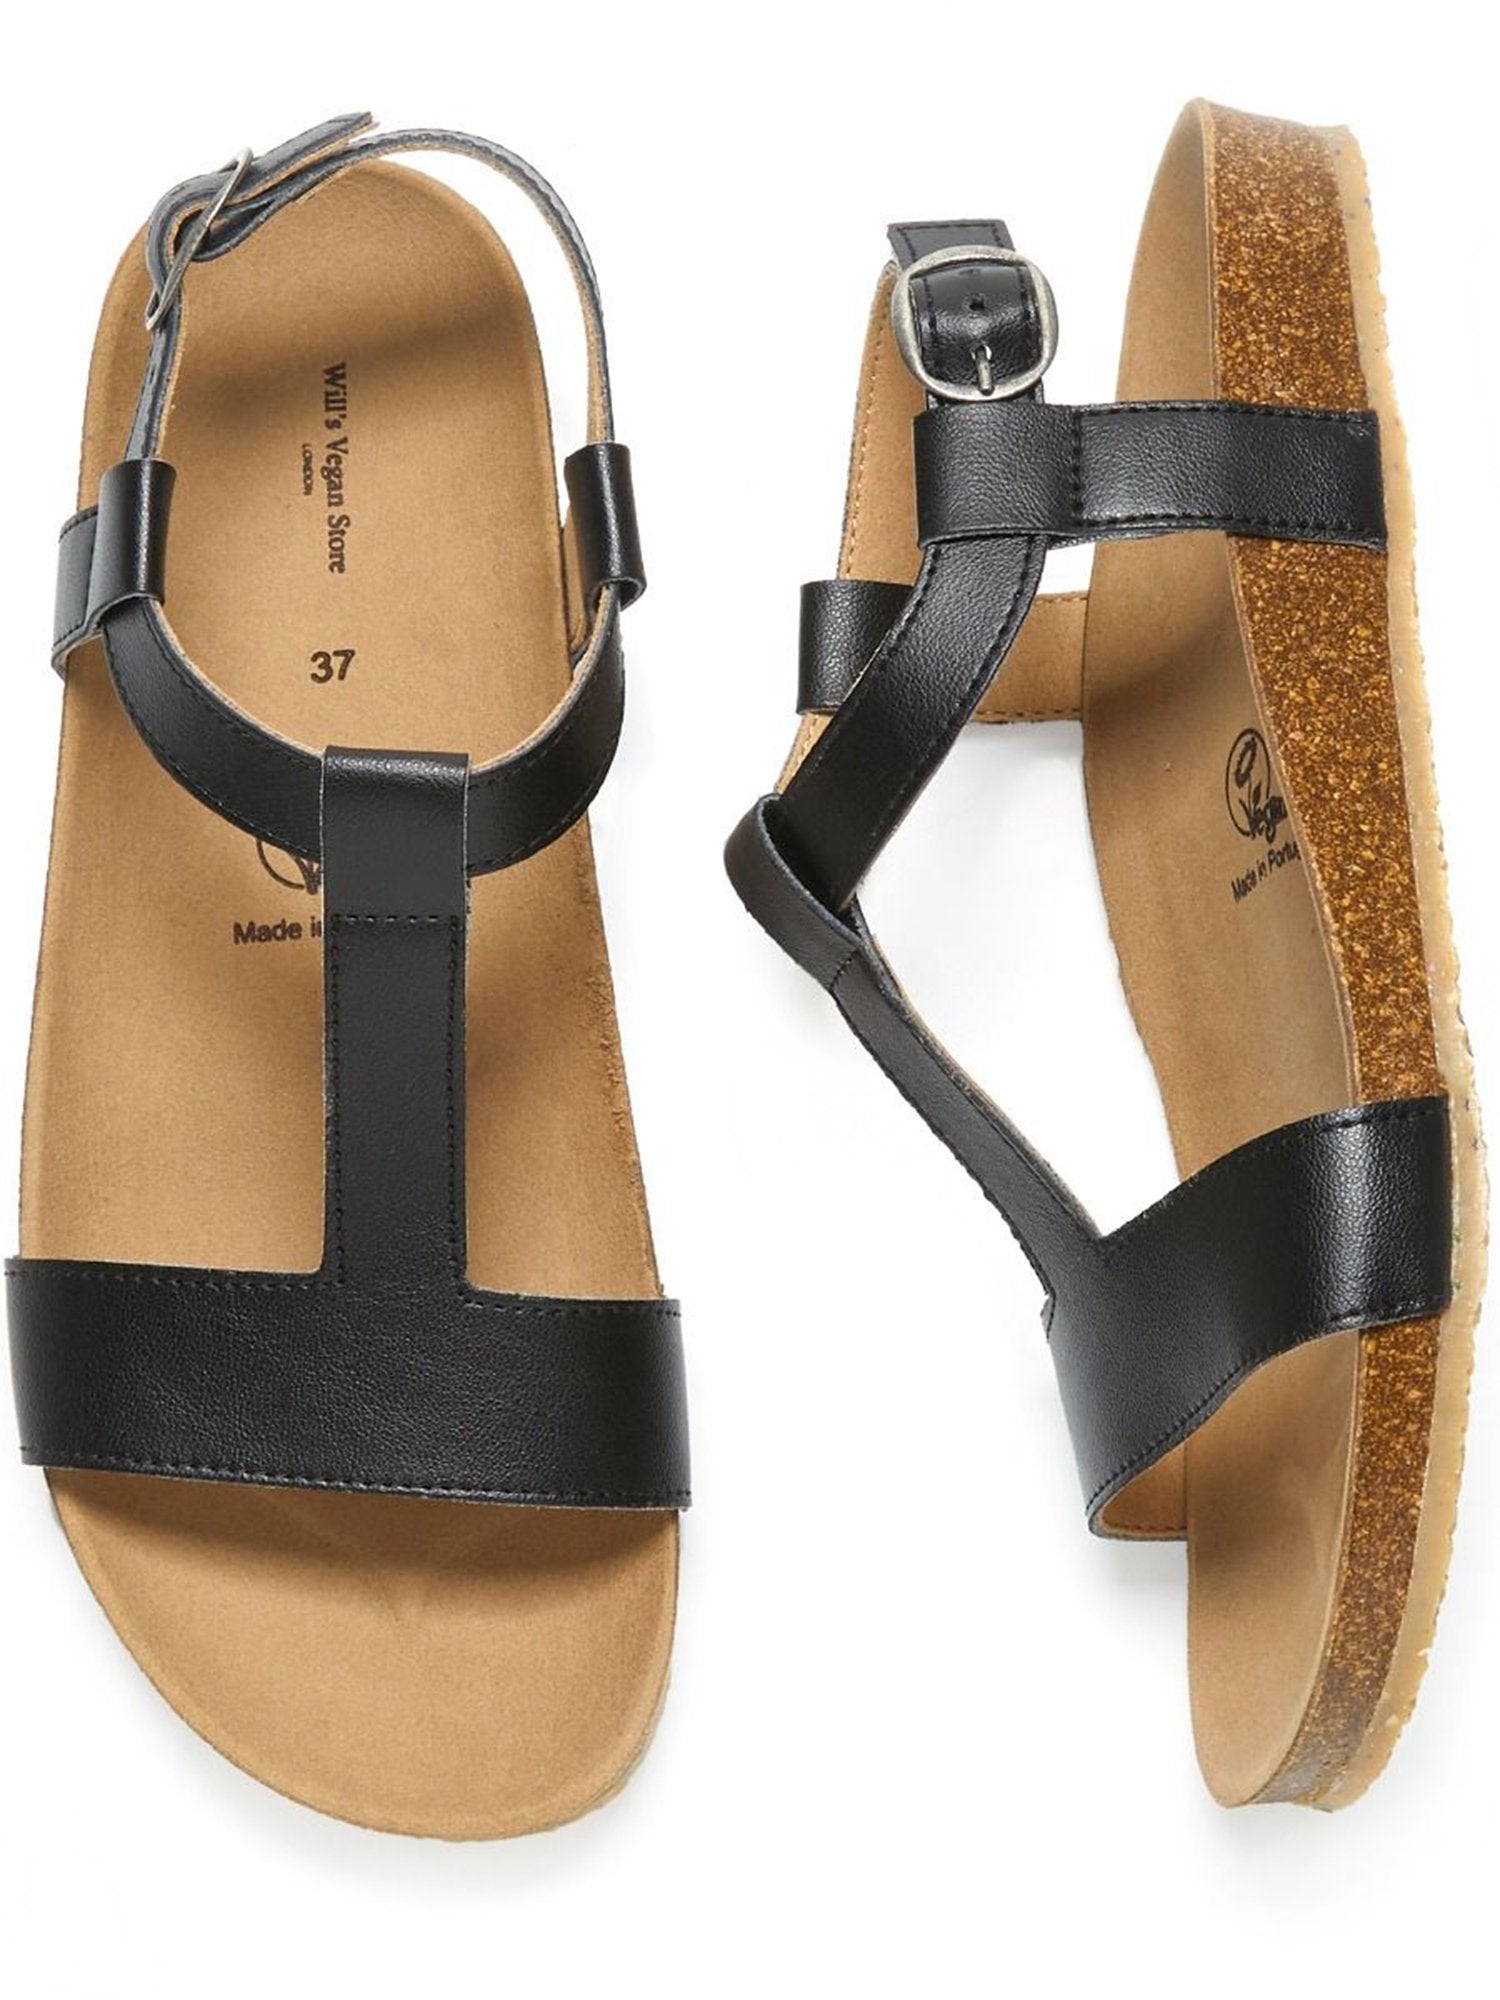 Women's Suede Leather Wedges Sandals Adjustable Ankle Buckle Casual  Espadrilles Cork Footbed Sandal Shoes - Walmart.com